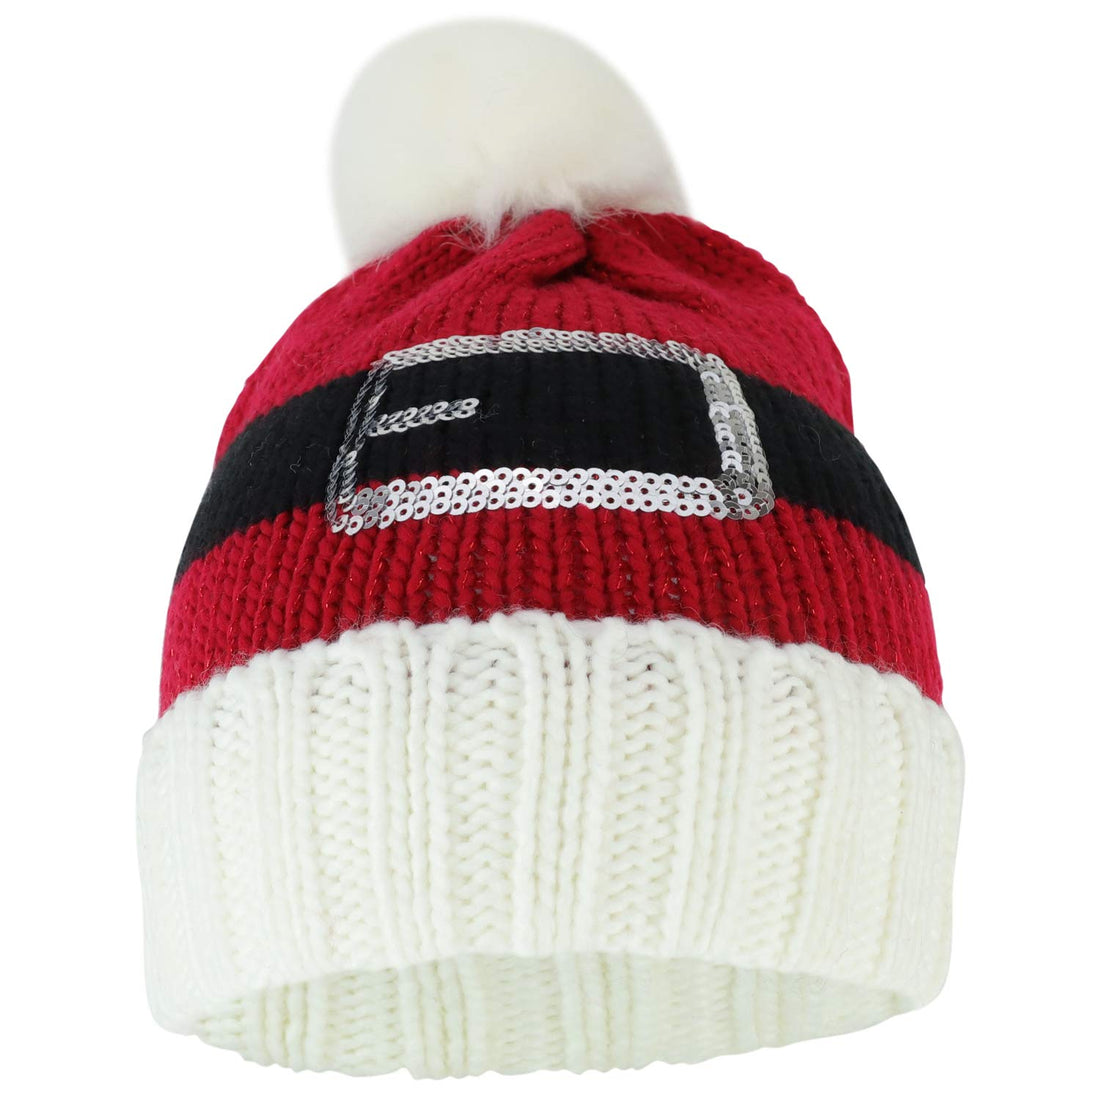 Trendy Apparel Shop Christmas Themed Funny Ugly Holiday Pom Knit Beanie Hats - Santas Belt